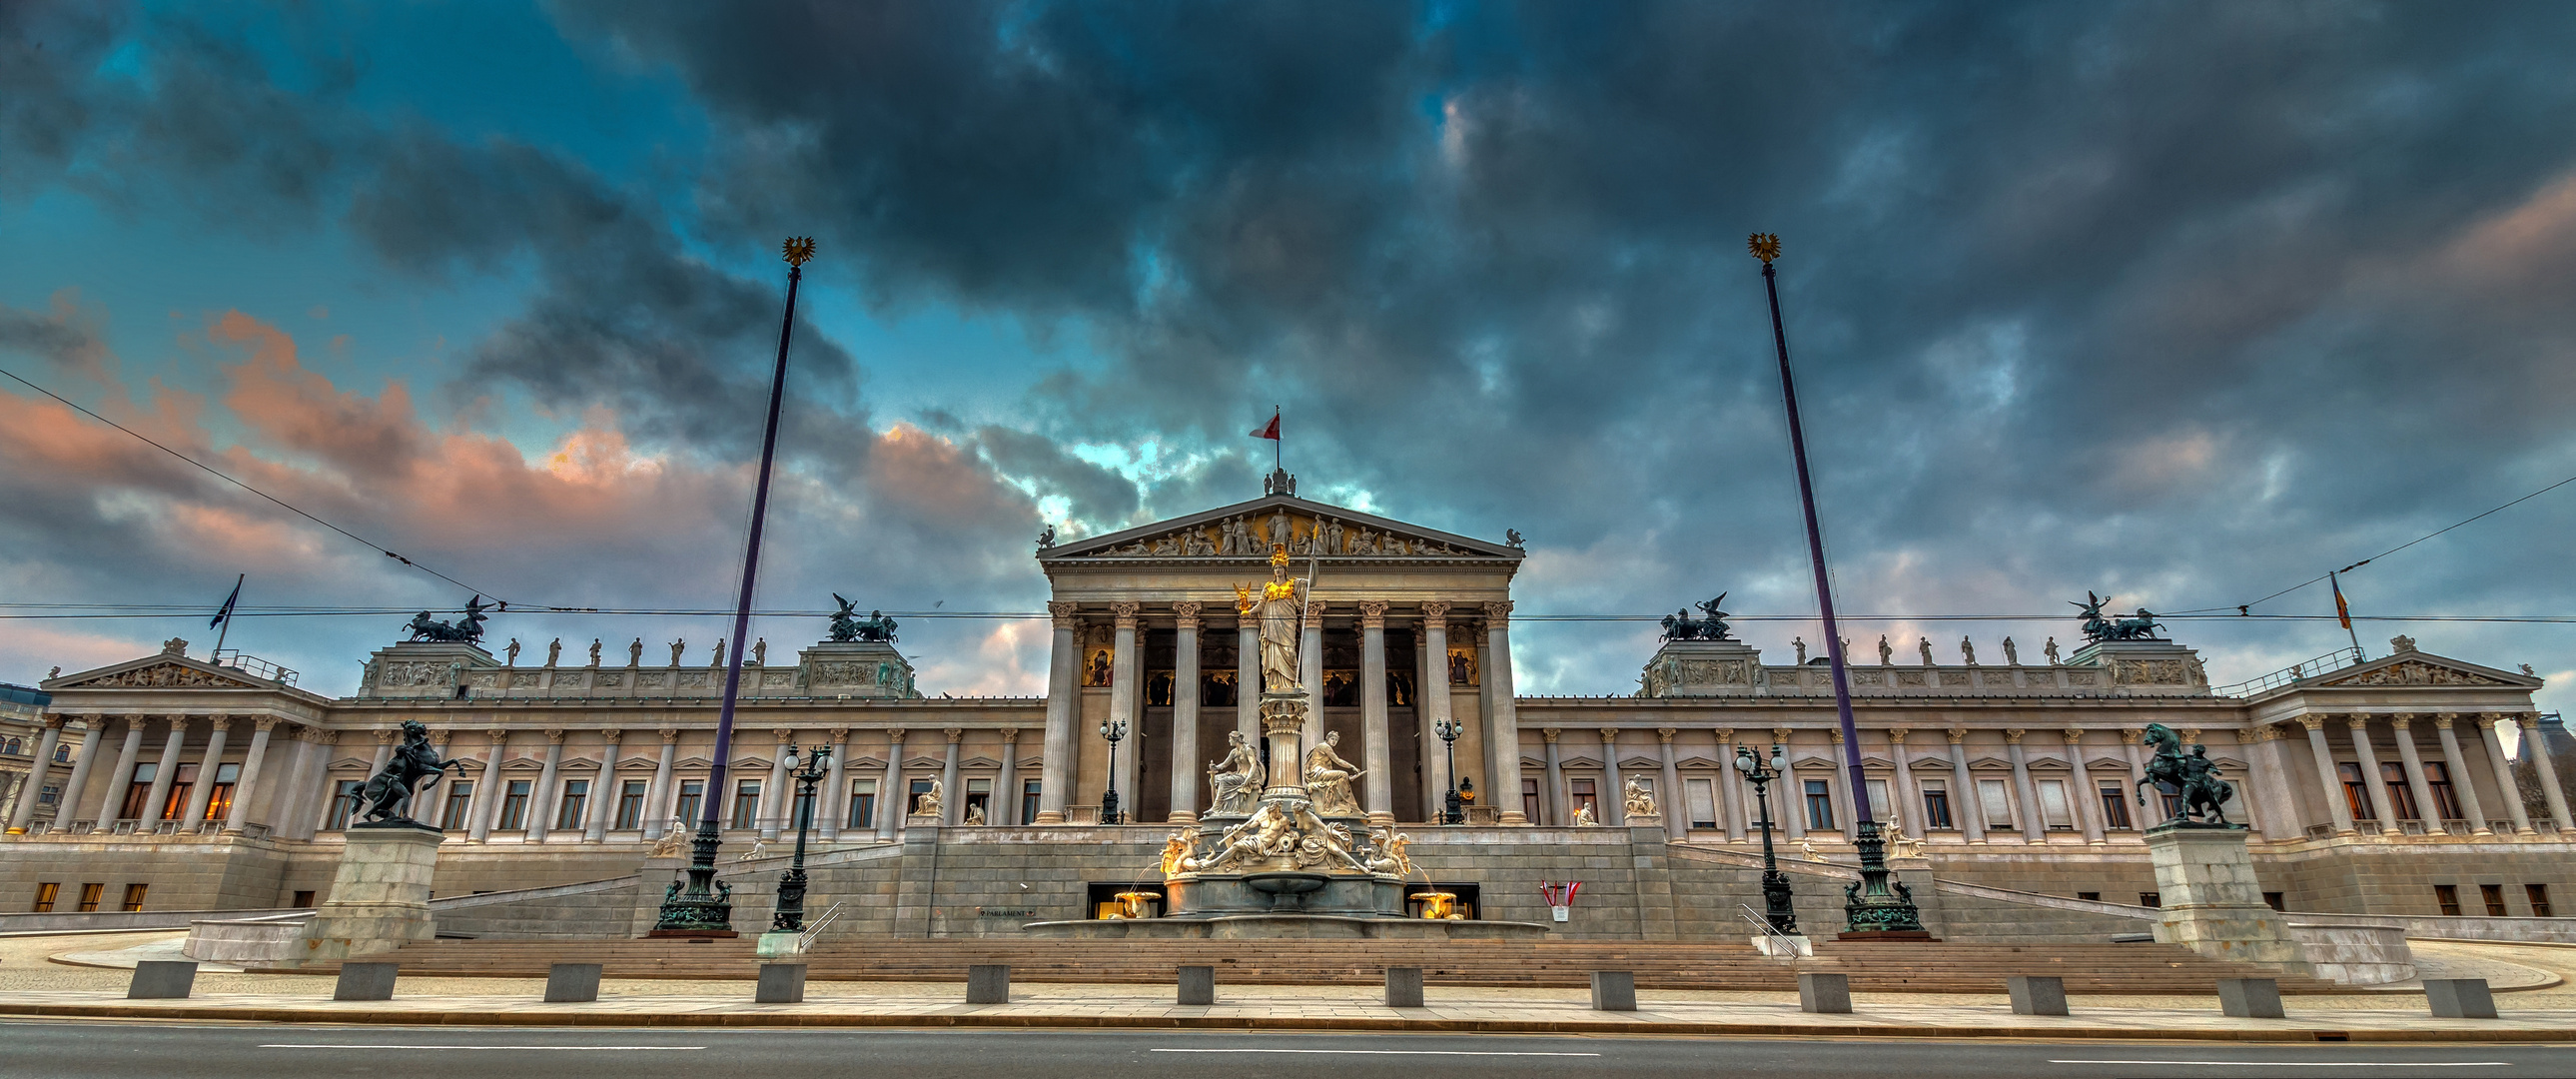 Parlamentsgebäude Wien HDR